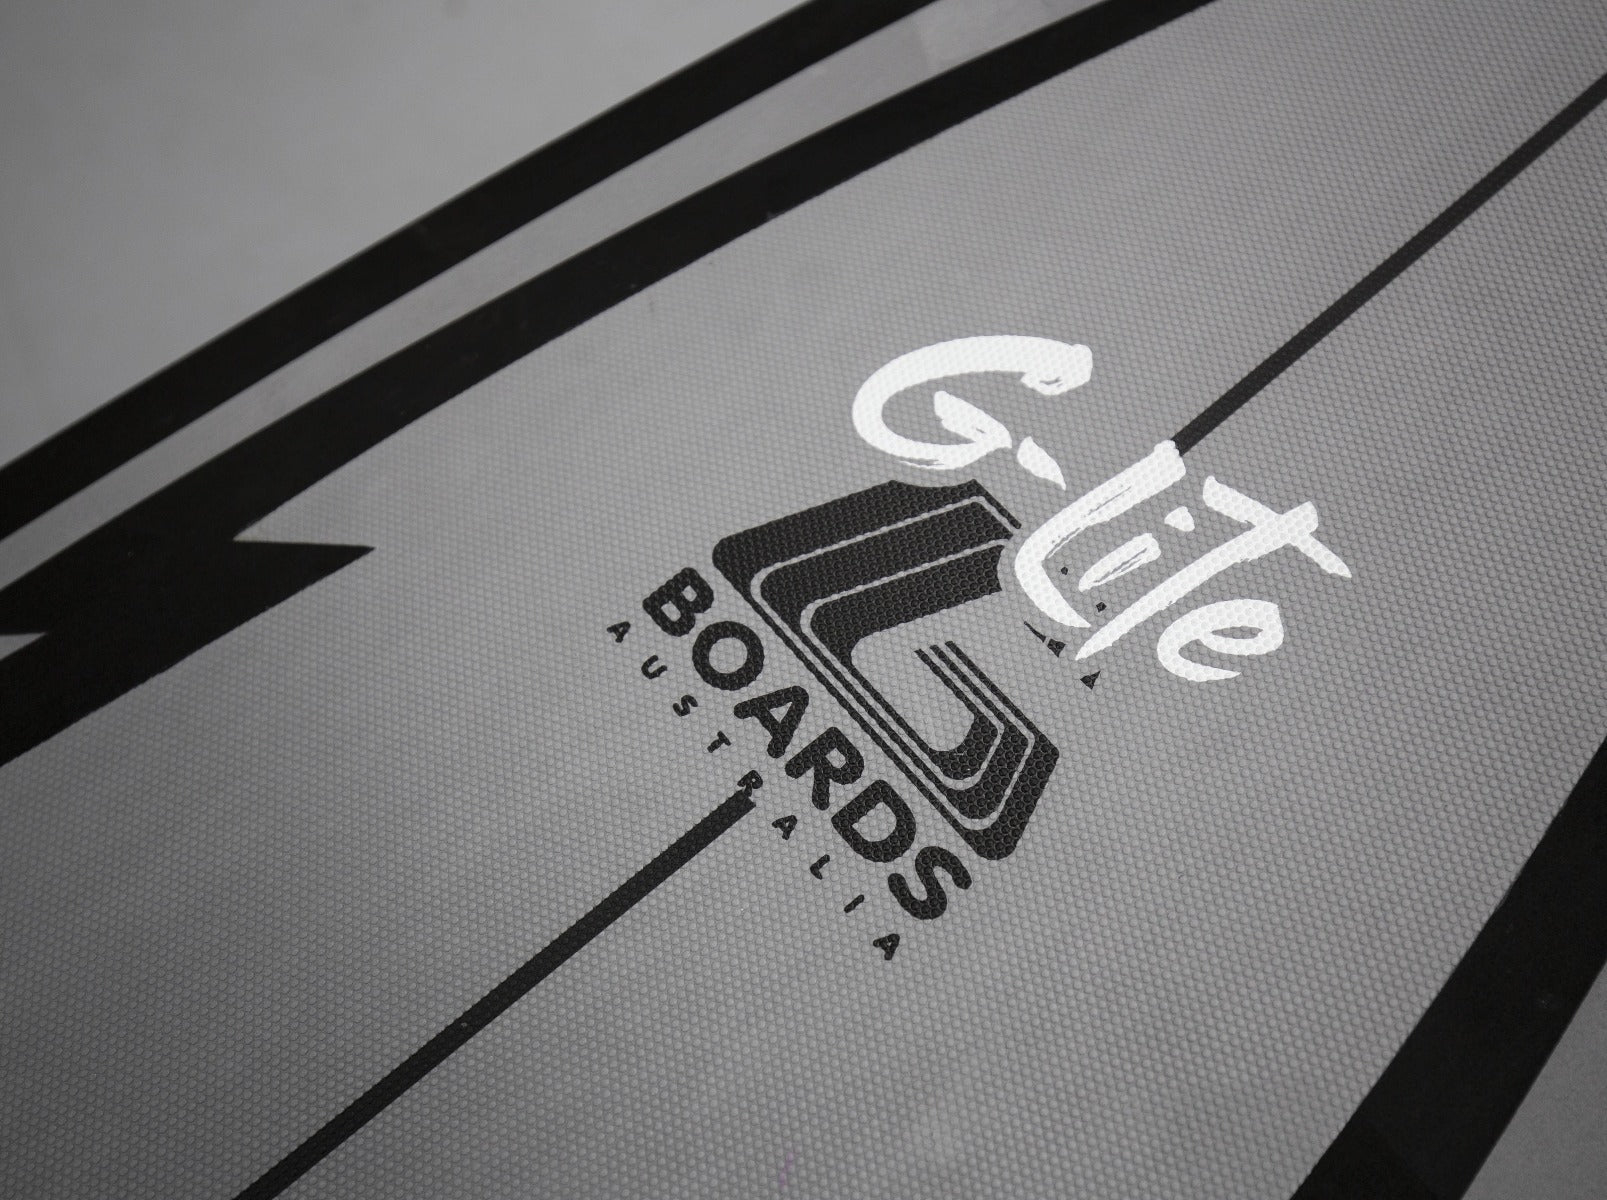 G-Lite 5'6" Swallow Tail Performance Softboard